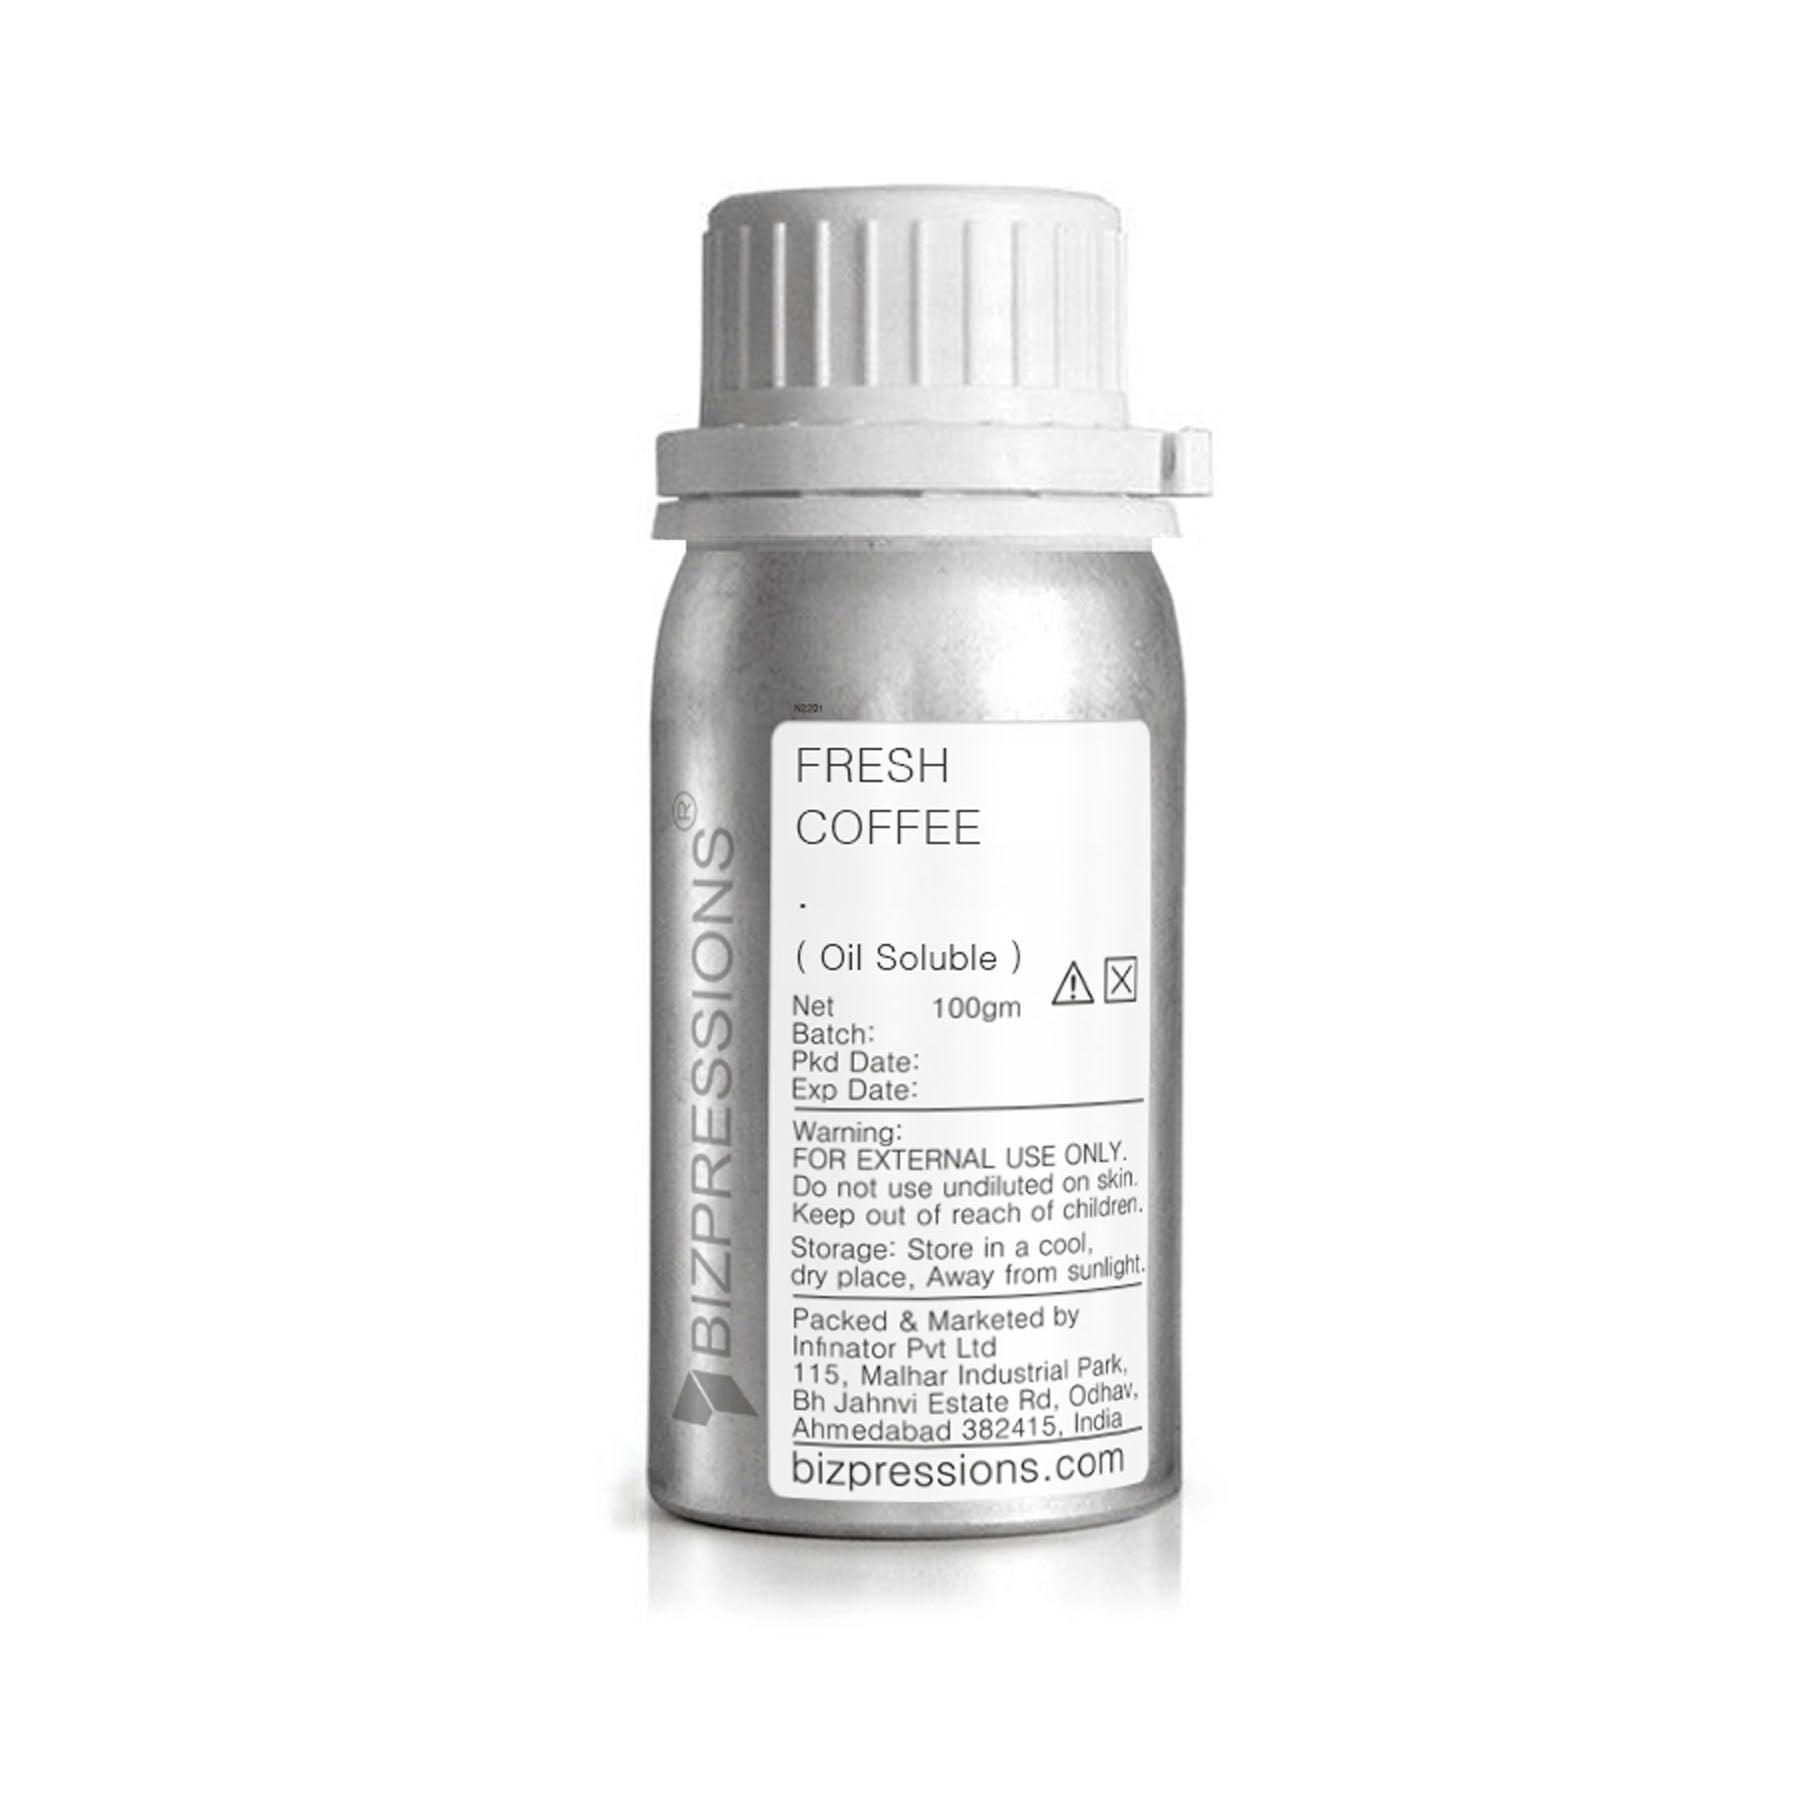 FRESH COFFEE - Fragrance ( Oil Soluble ) - 100 gm